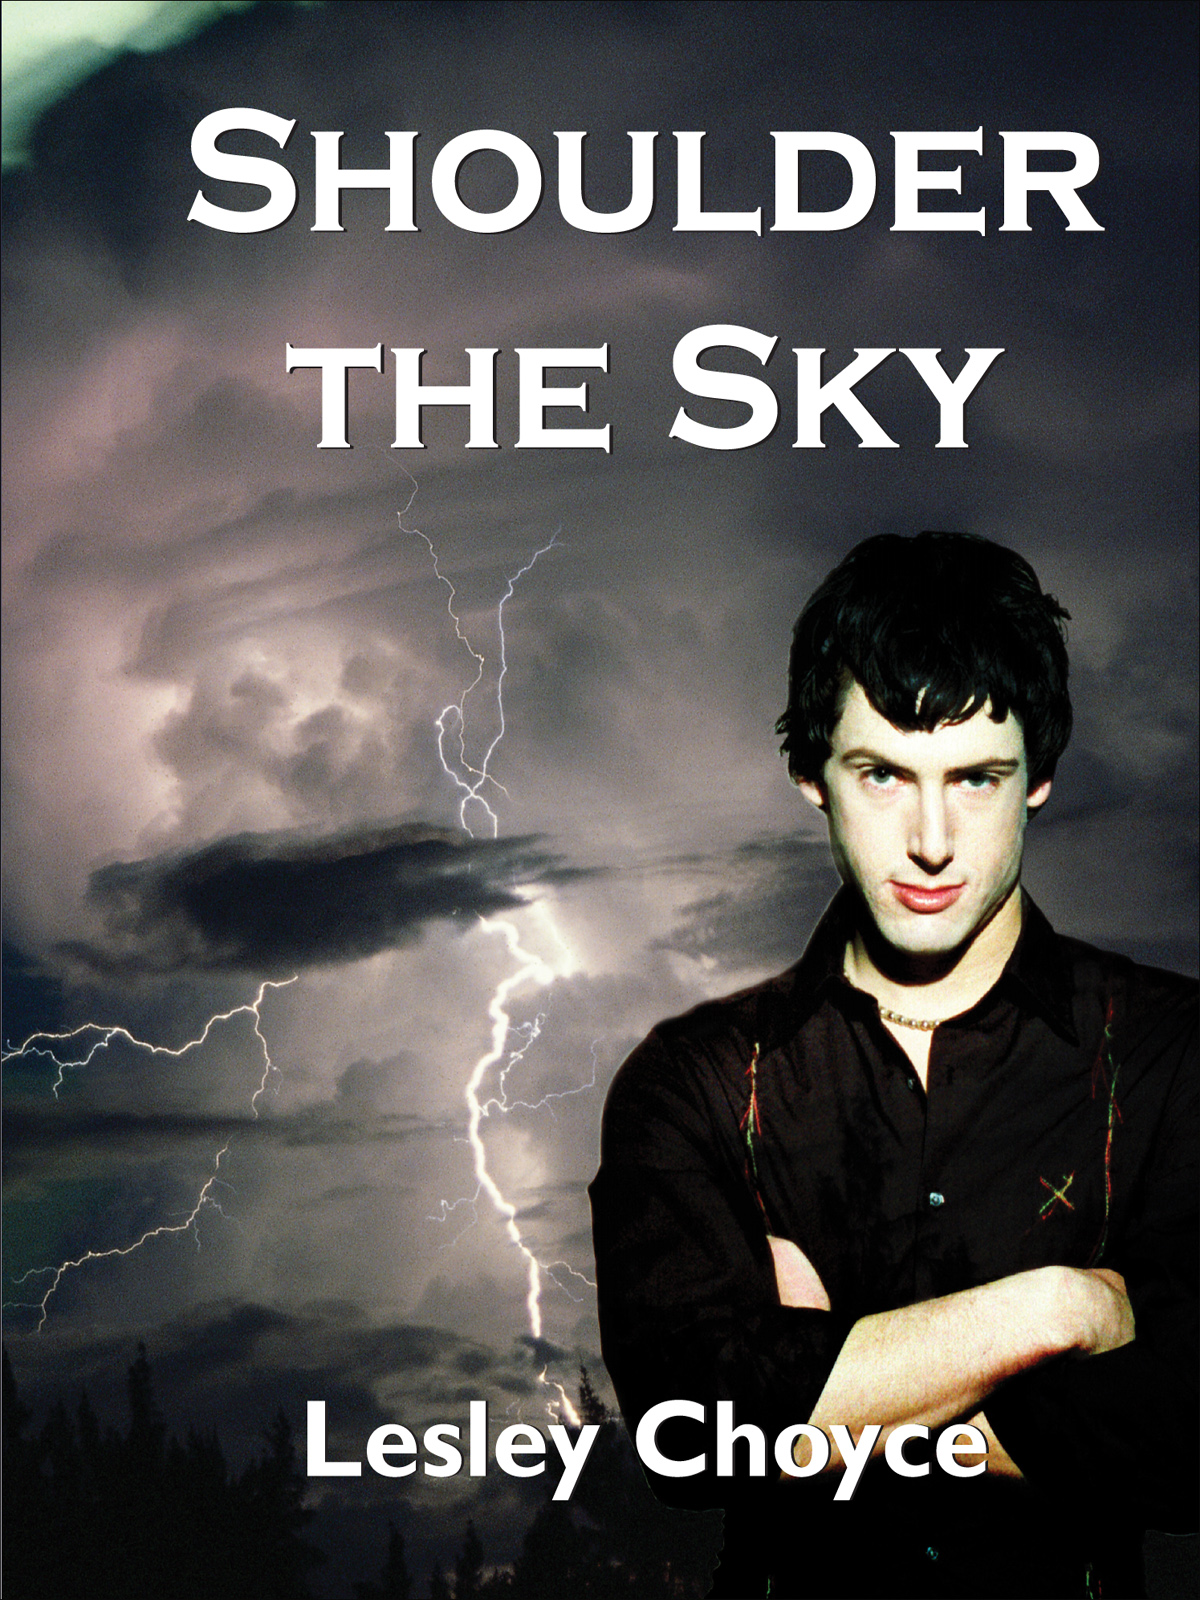 Shoulder the Sky (2002) by Lesley Choyce